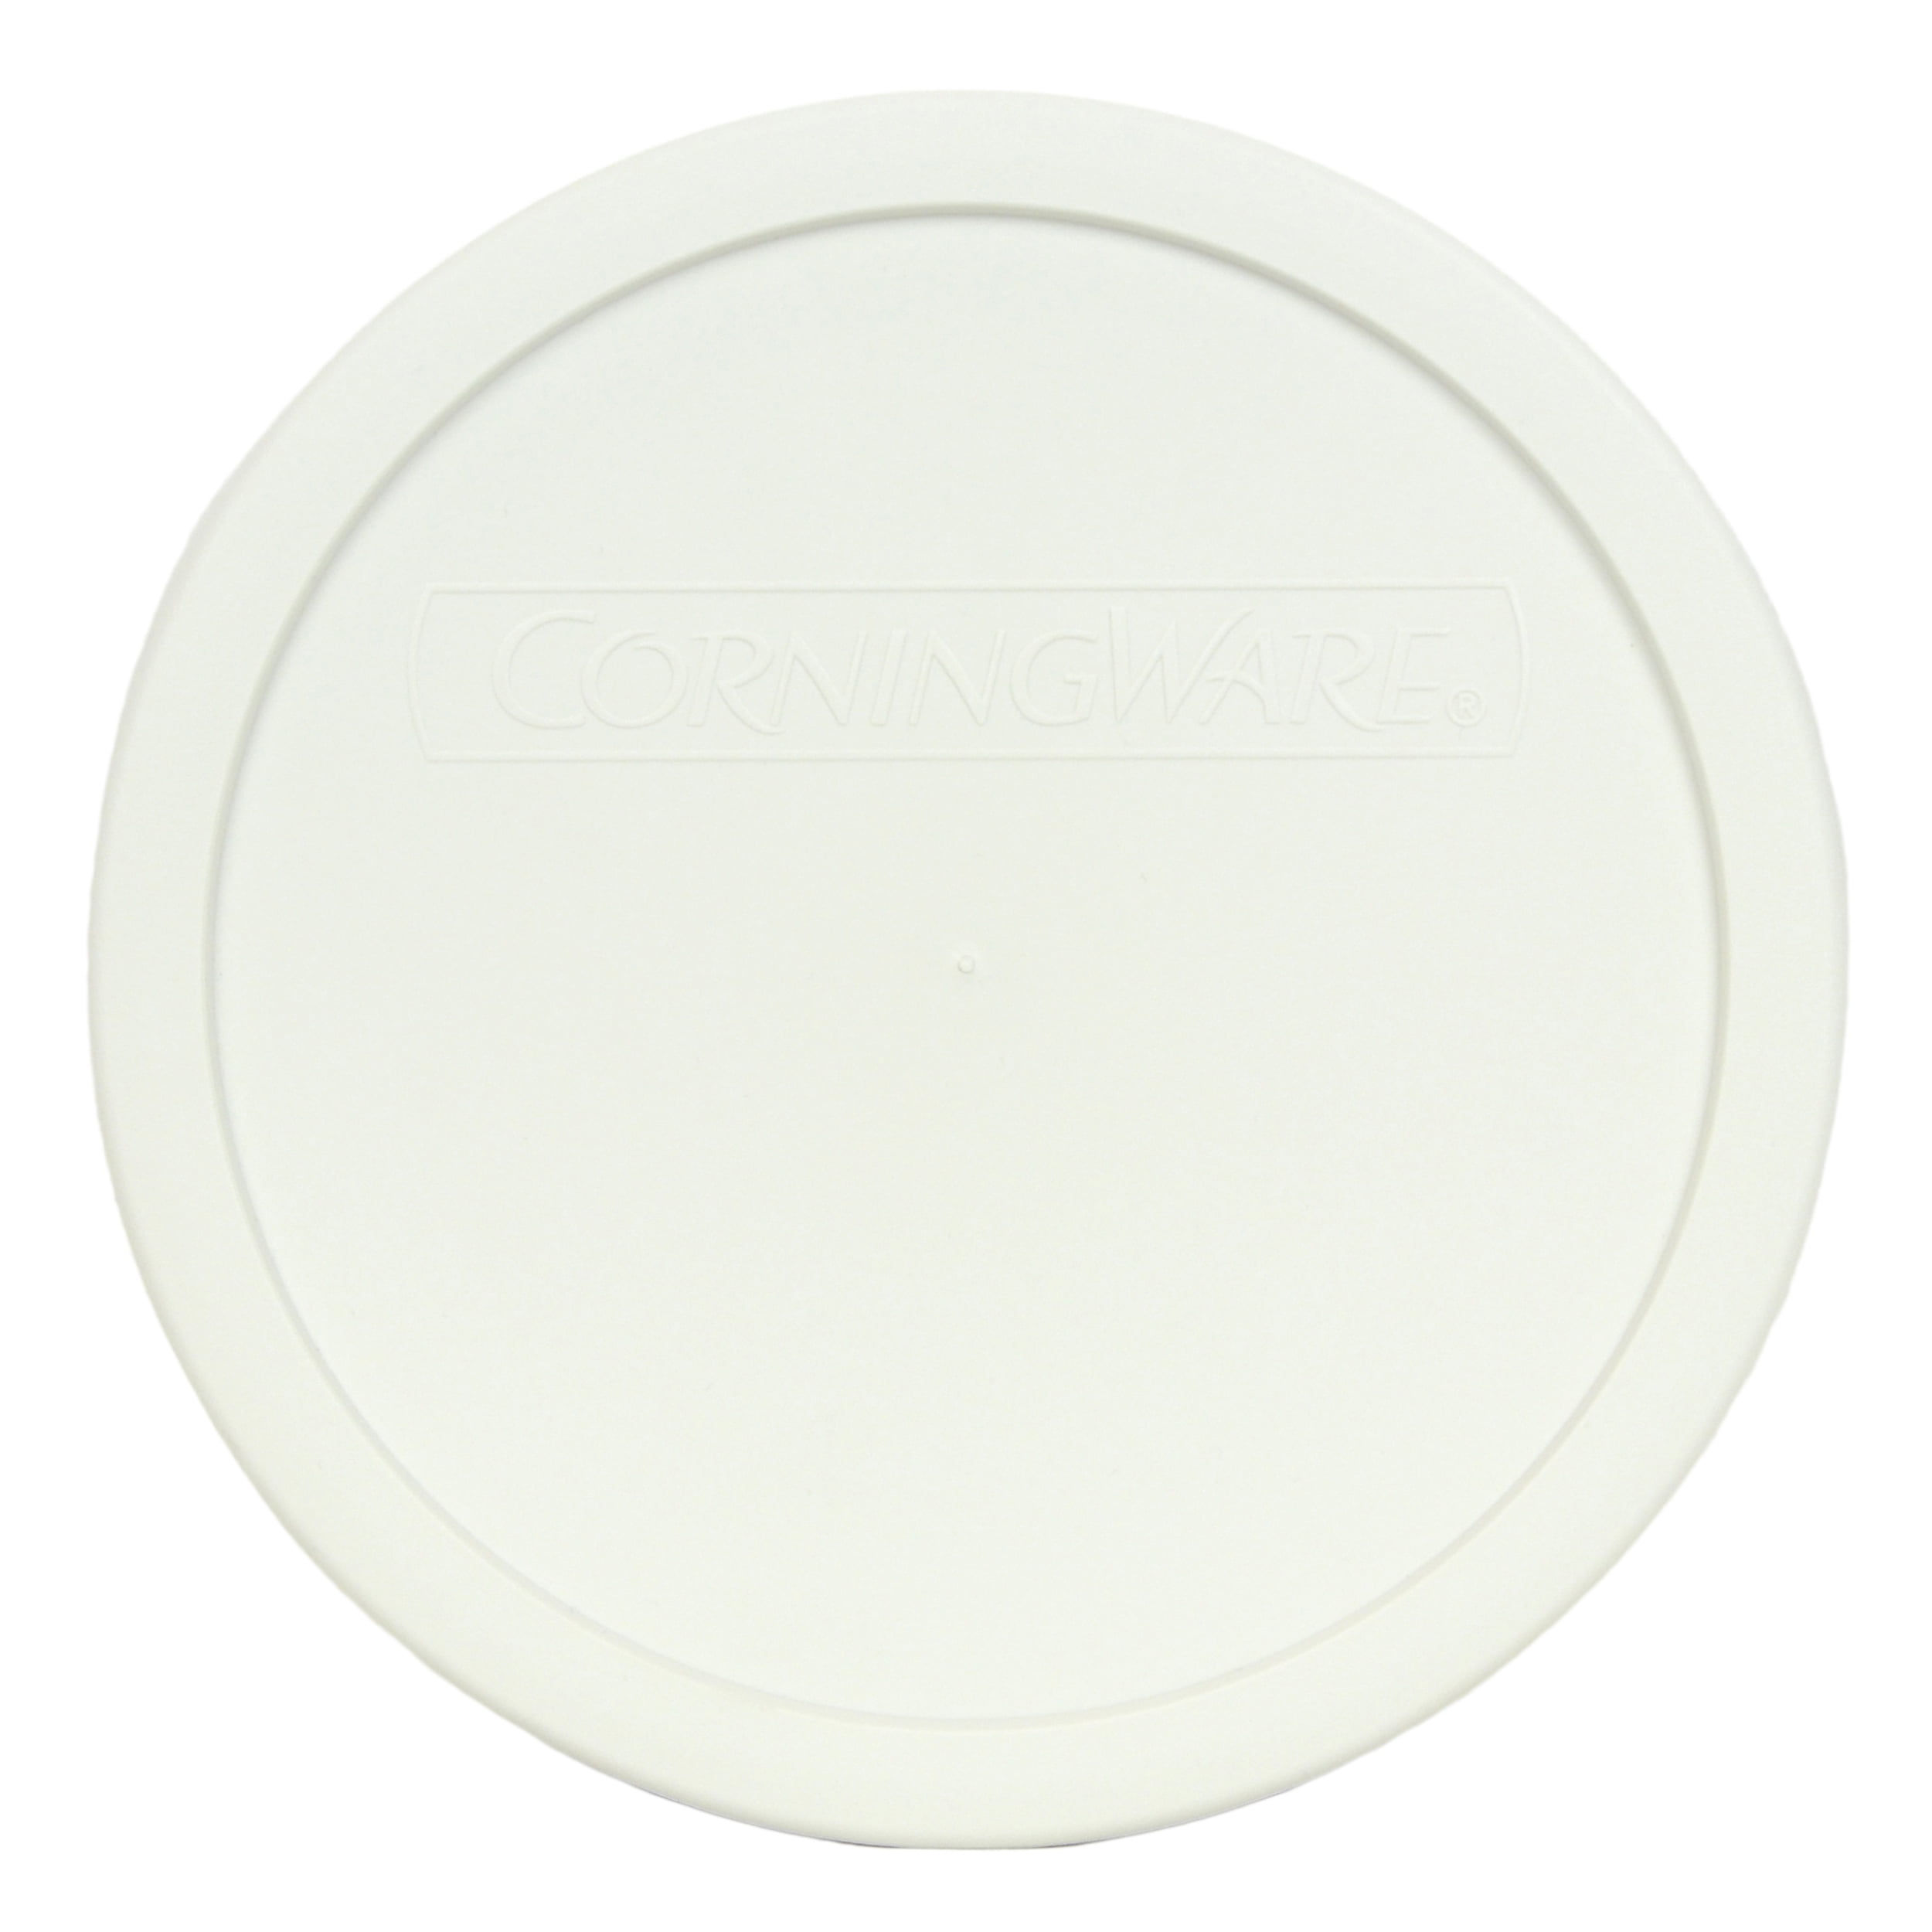 CorningWare Corning Ware Elegant French White 1.5 QT/1.5 L Round Casserole Dish w/ White Lid 